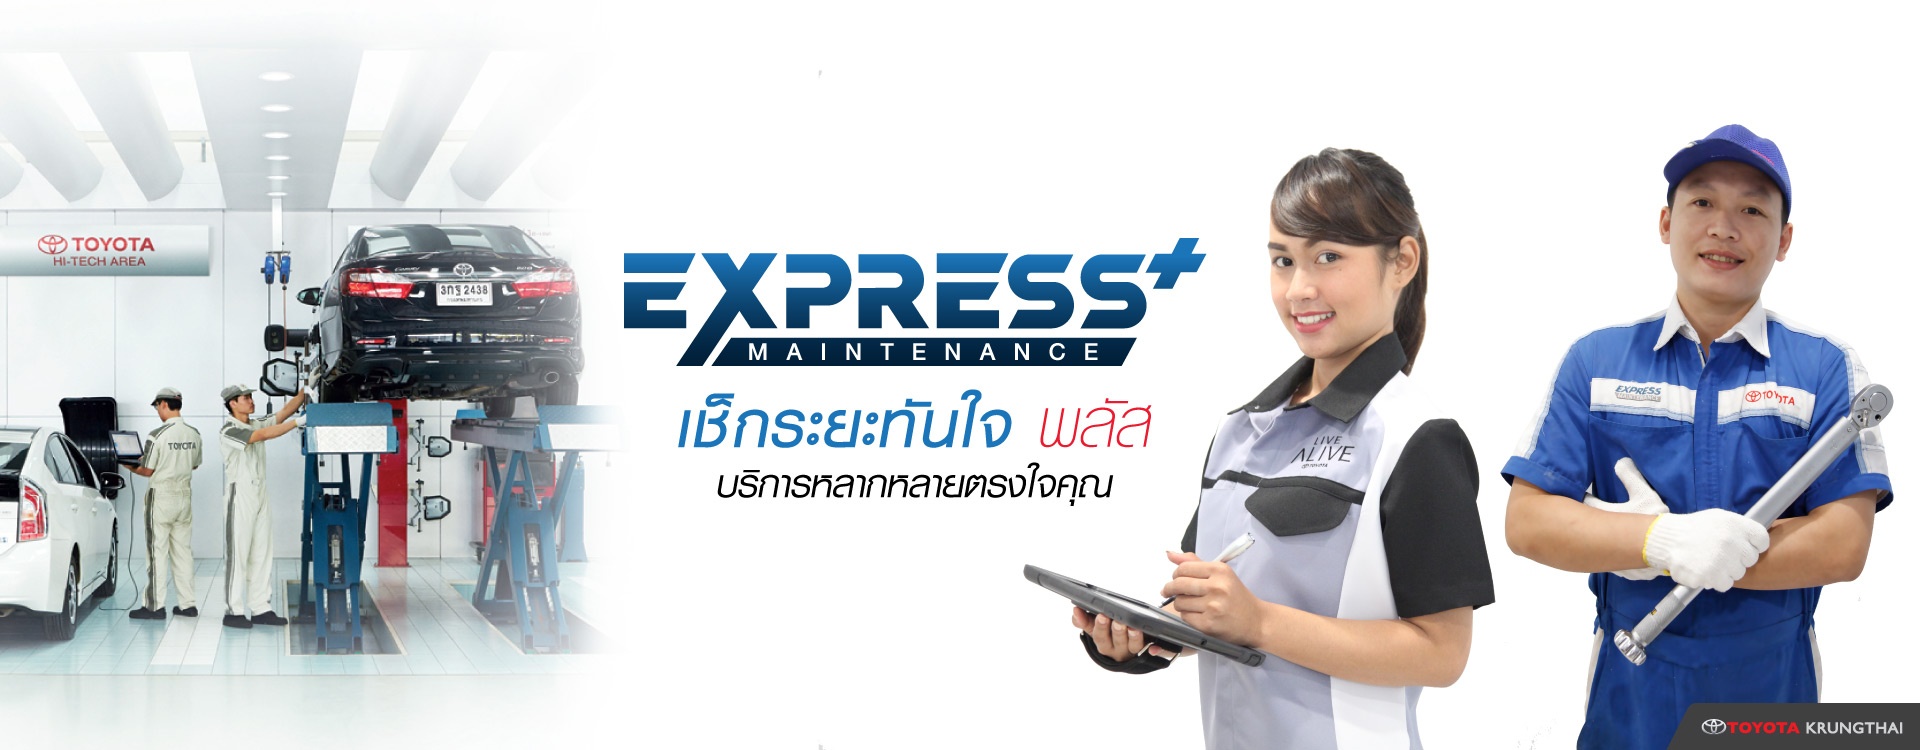 Express-Plus-Banner-1920x750